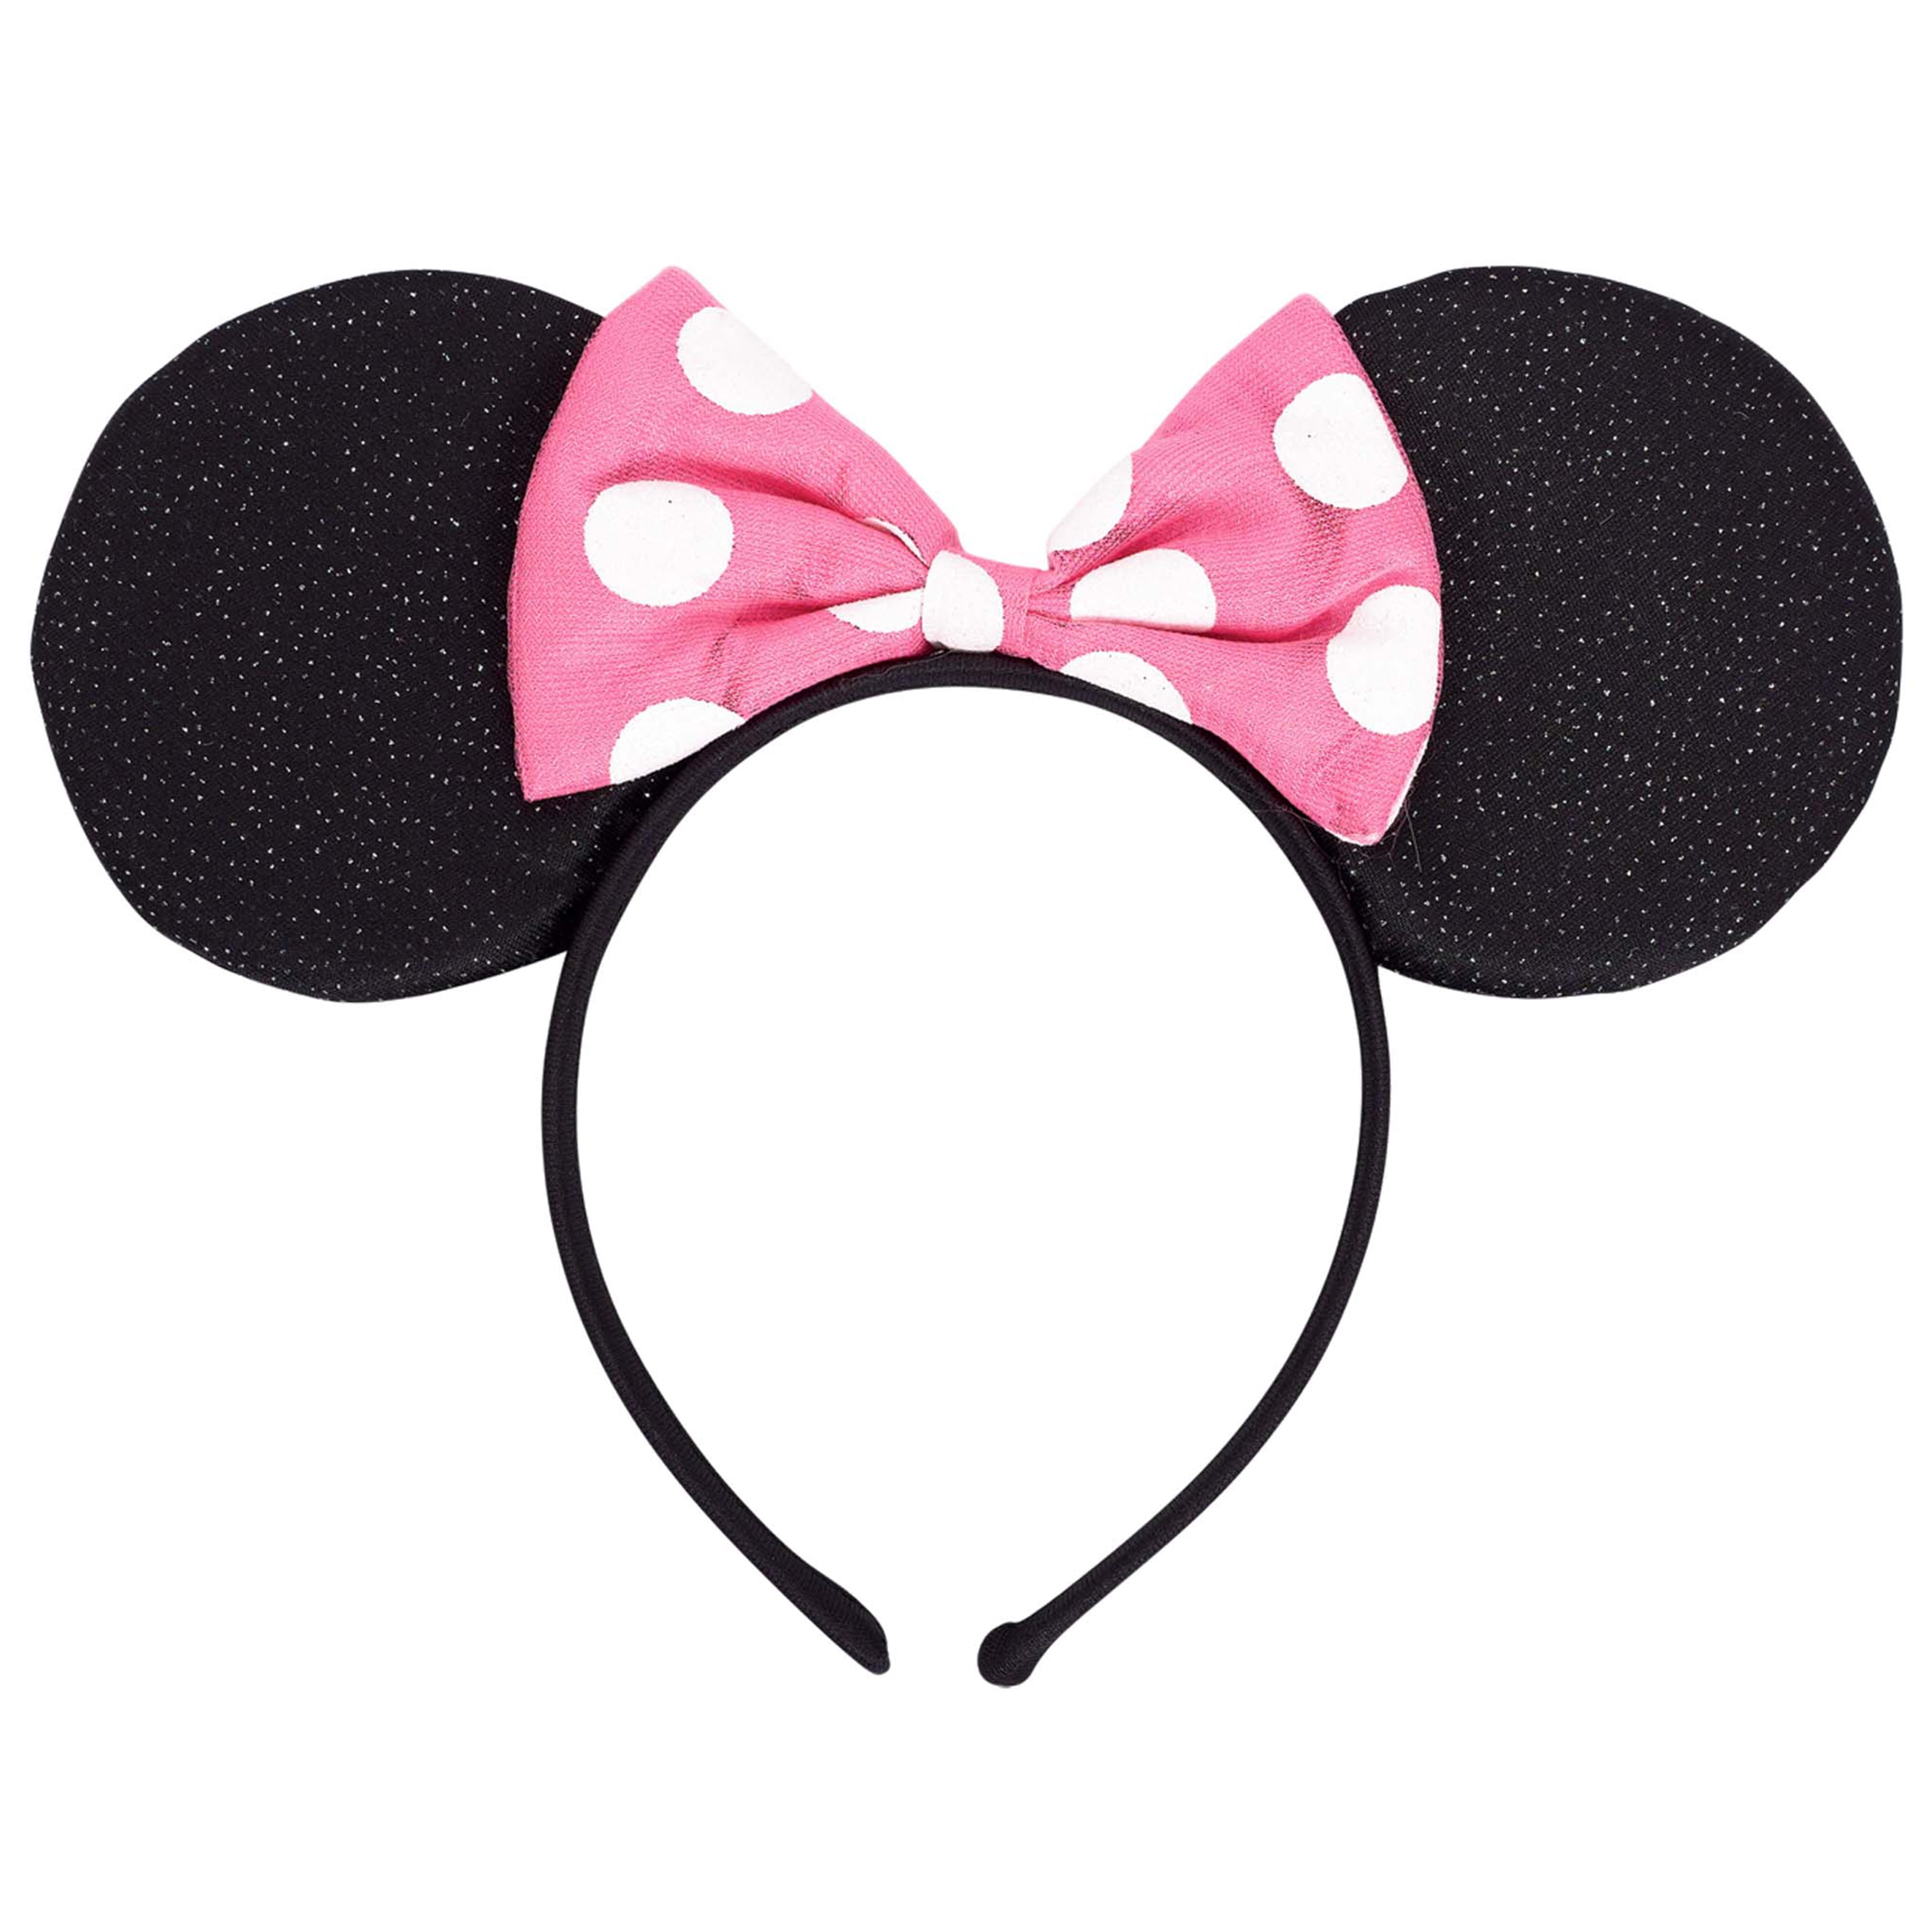 30 PCS Minnie Mouse Ears Headbands Black Pink Polka Dot Bow Party Favors Mickey